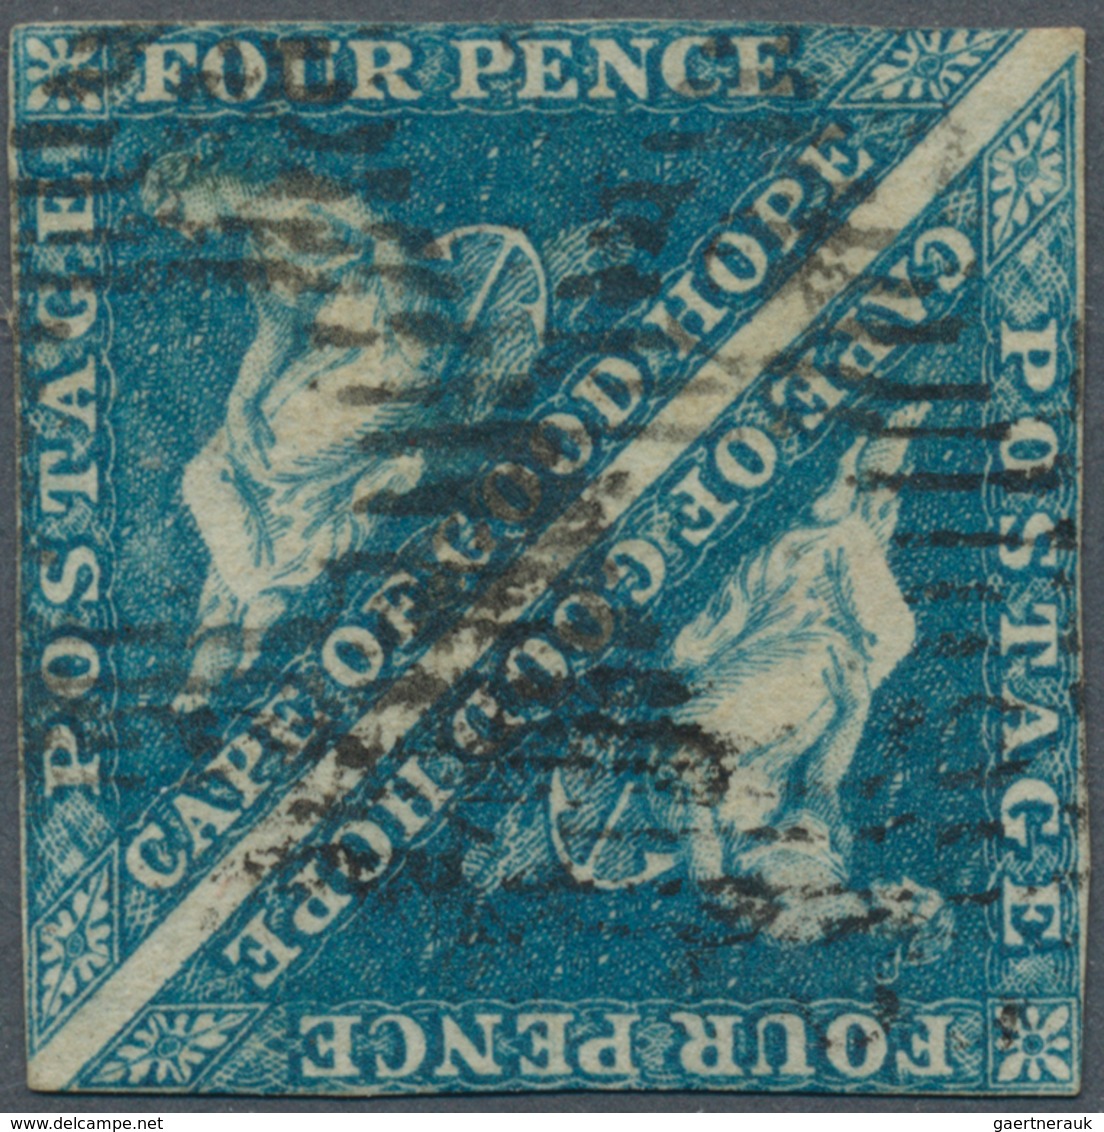 Kap Der Guten Hoffnung: 1855/1864 (ca.), Triangulars, Lot Of 16 Single Stamps And One Pair, Slightly - Cabo De Buena Esperanza (1853-1904)